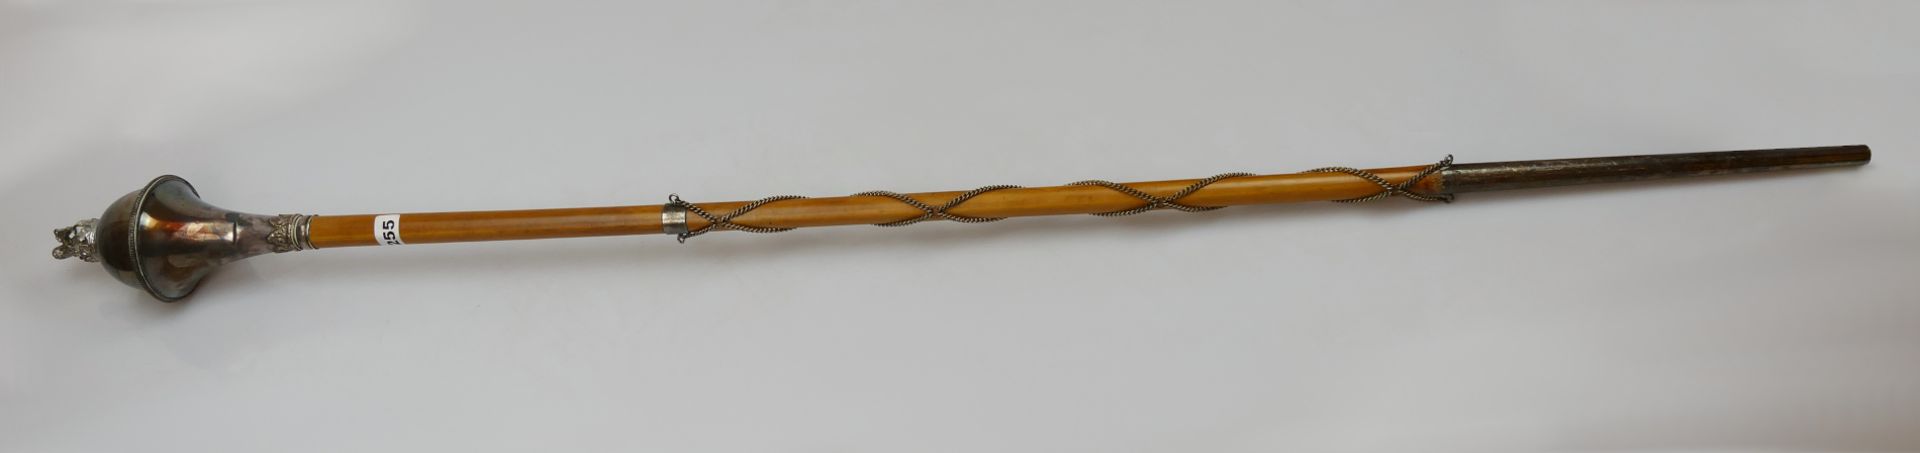 1 Tambourmajorstock Holz/wohl Metall versilbert mit Bekrönung "Englischer Löwe" H ca.147cm,  - Bild 3 aus 4